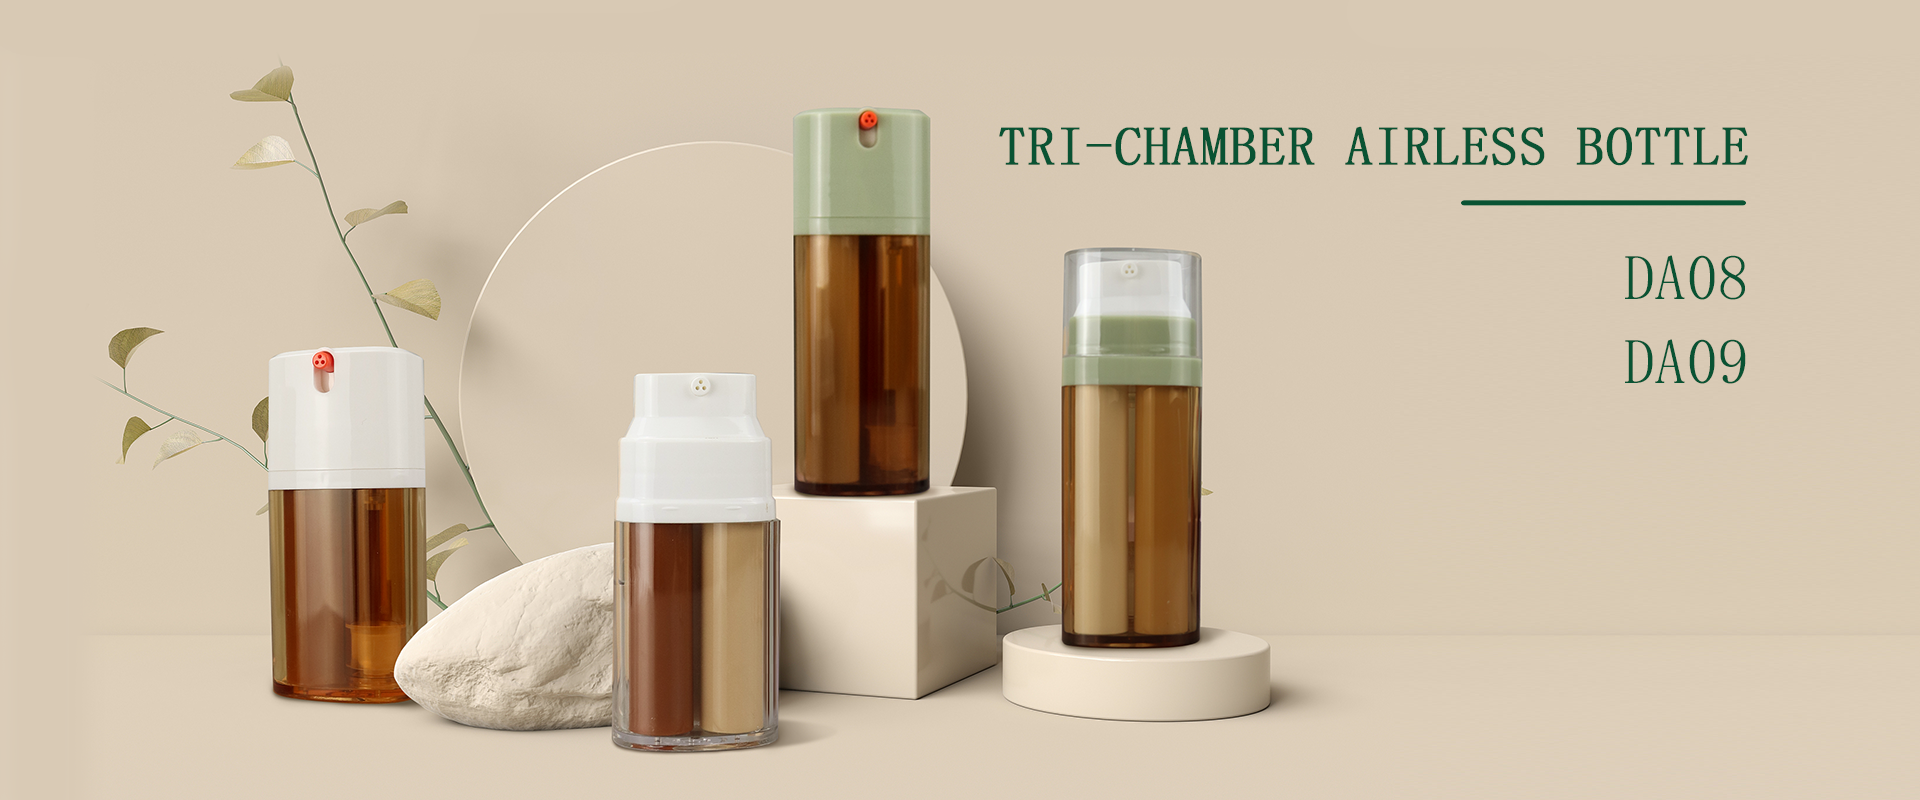 tri chamber airless bottle